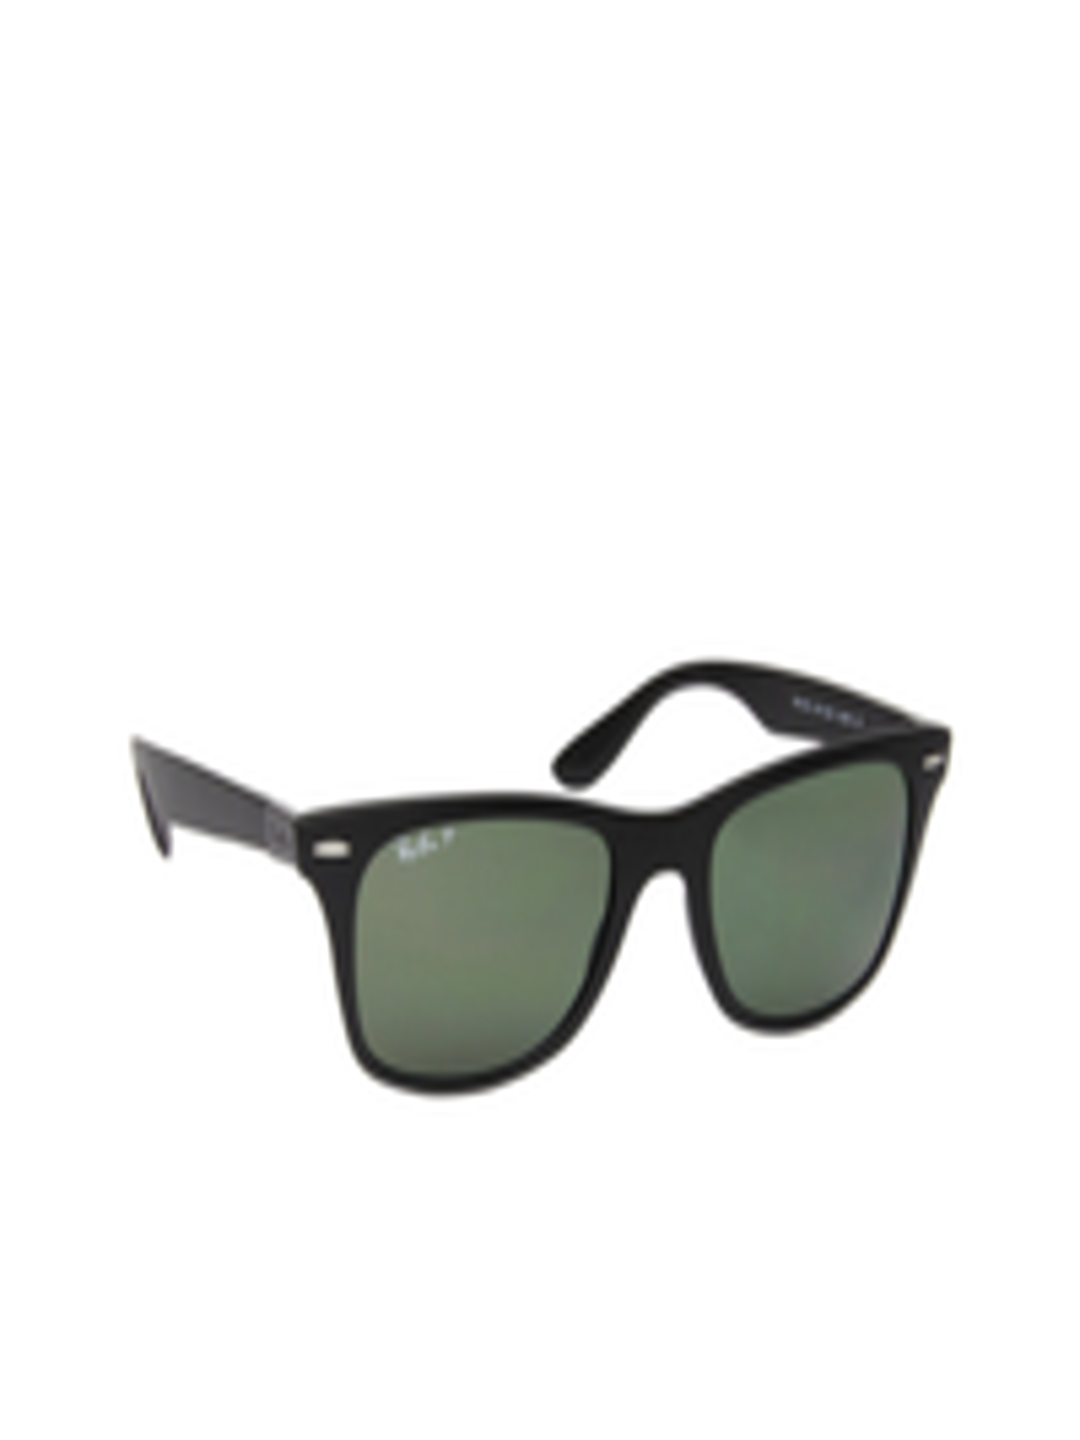 Buy Ray Ban Unisex Sunglasses - Sunglasses for Unisex 255347 | Myntra